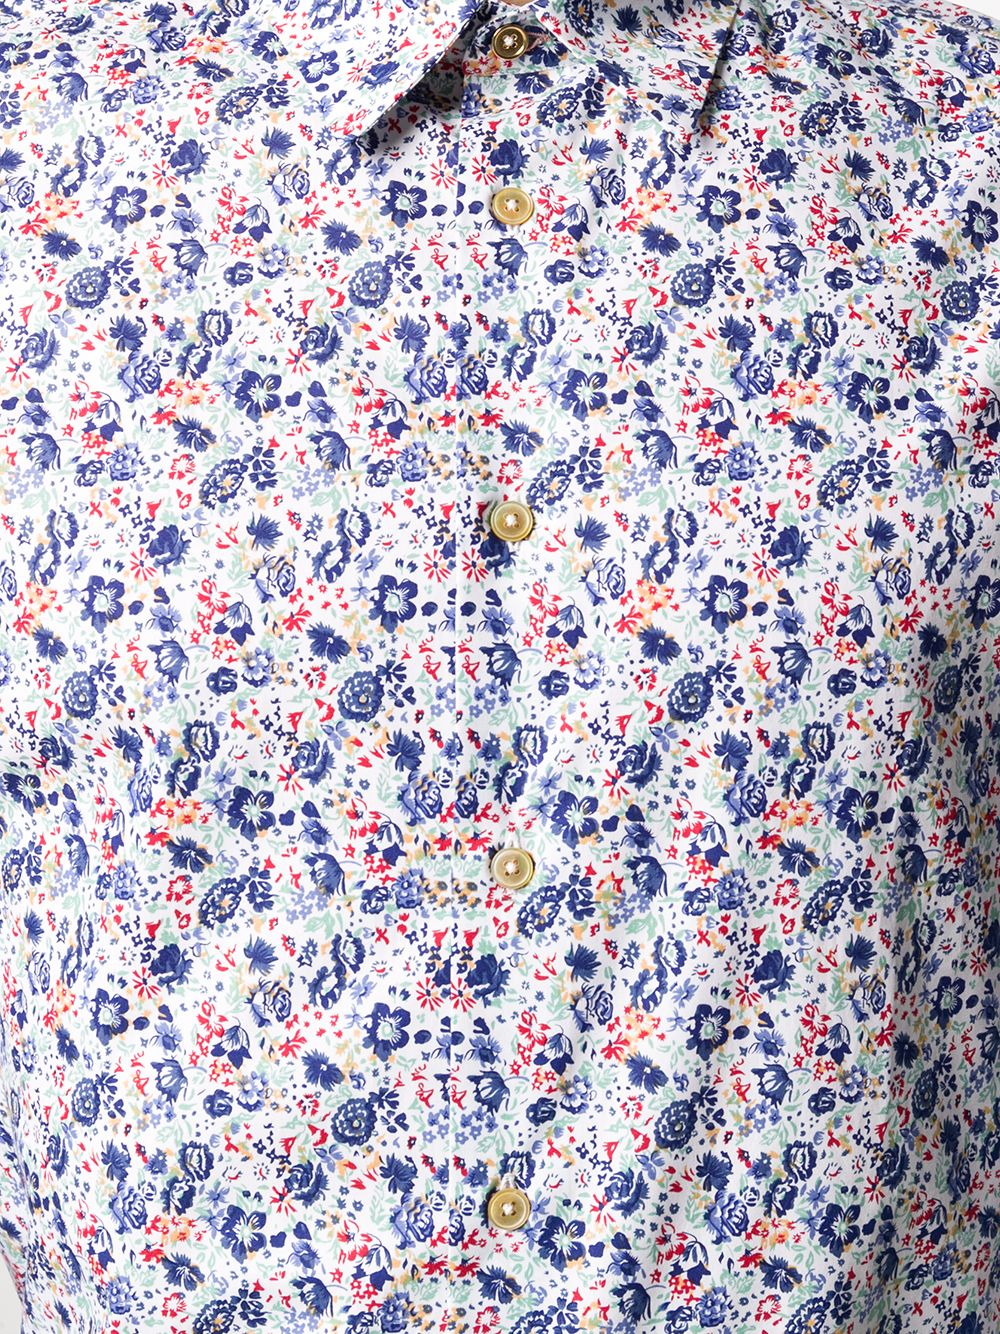 фото Paul smith рубашка liberty floral с длинными рукавами